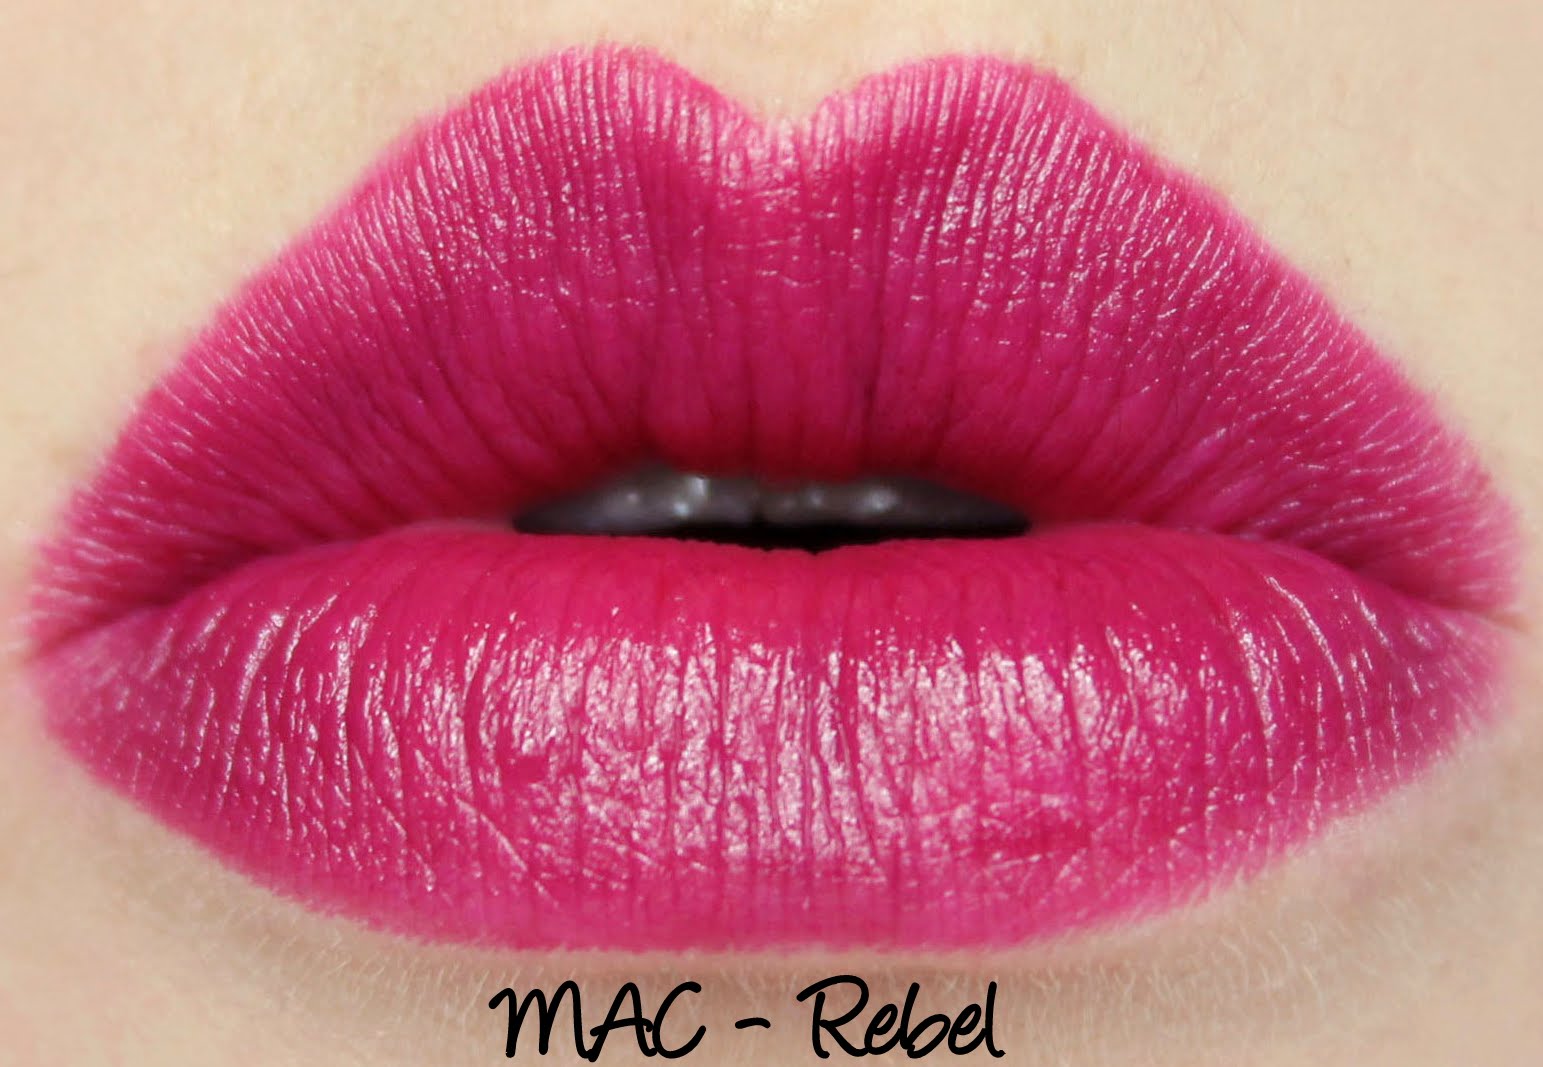 MAC Rebel lipstick swatch